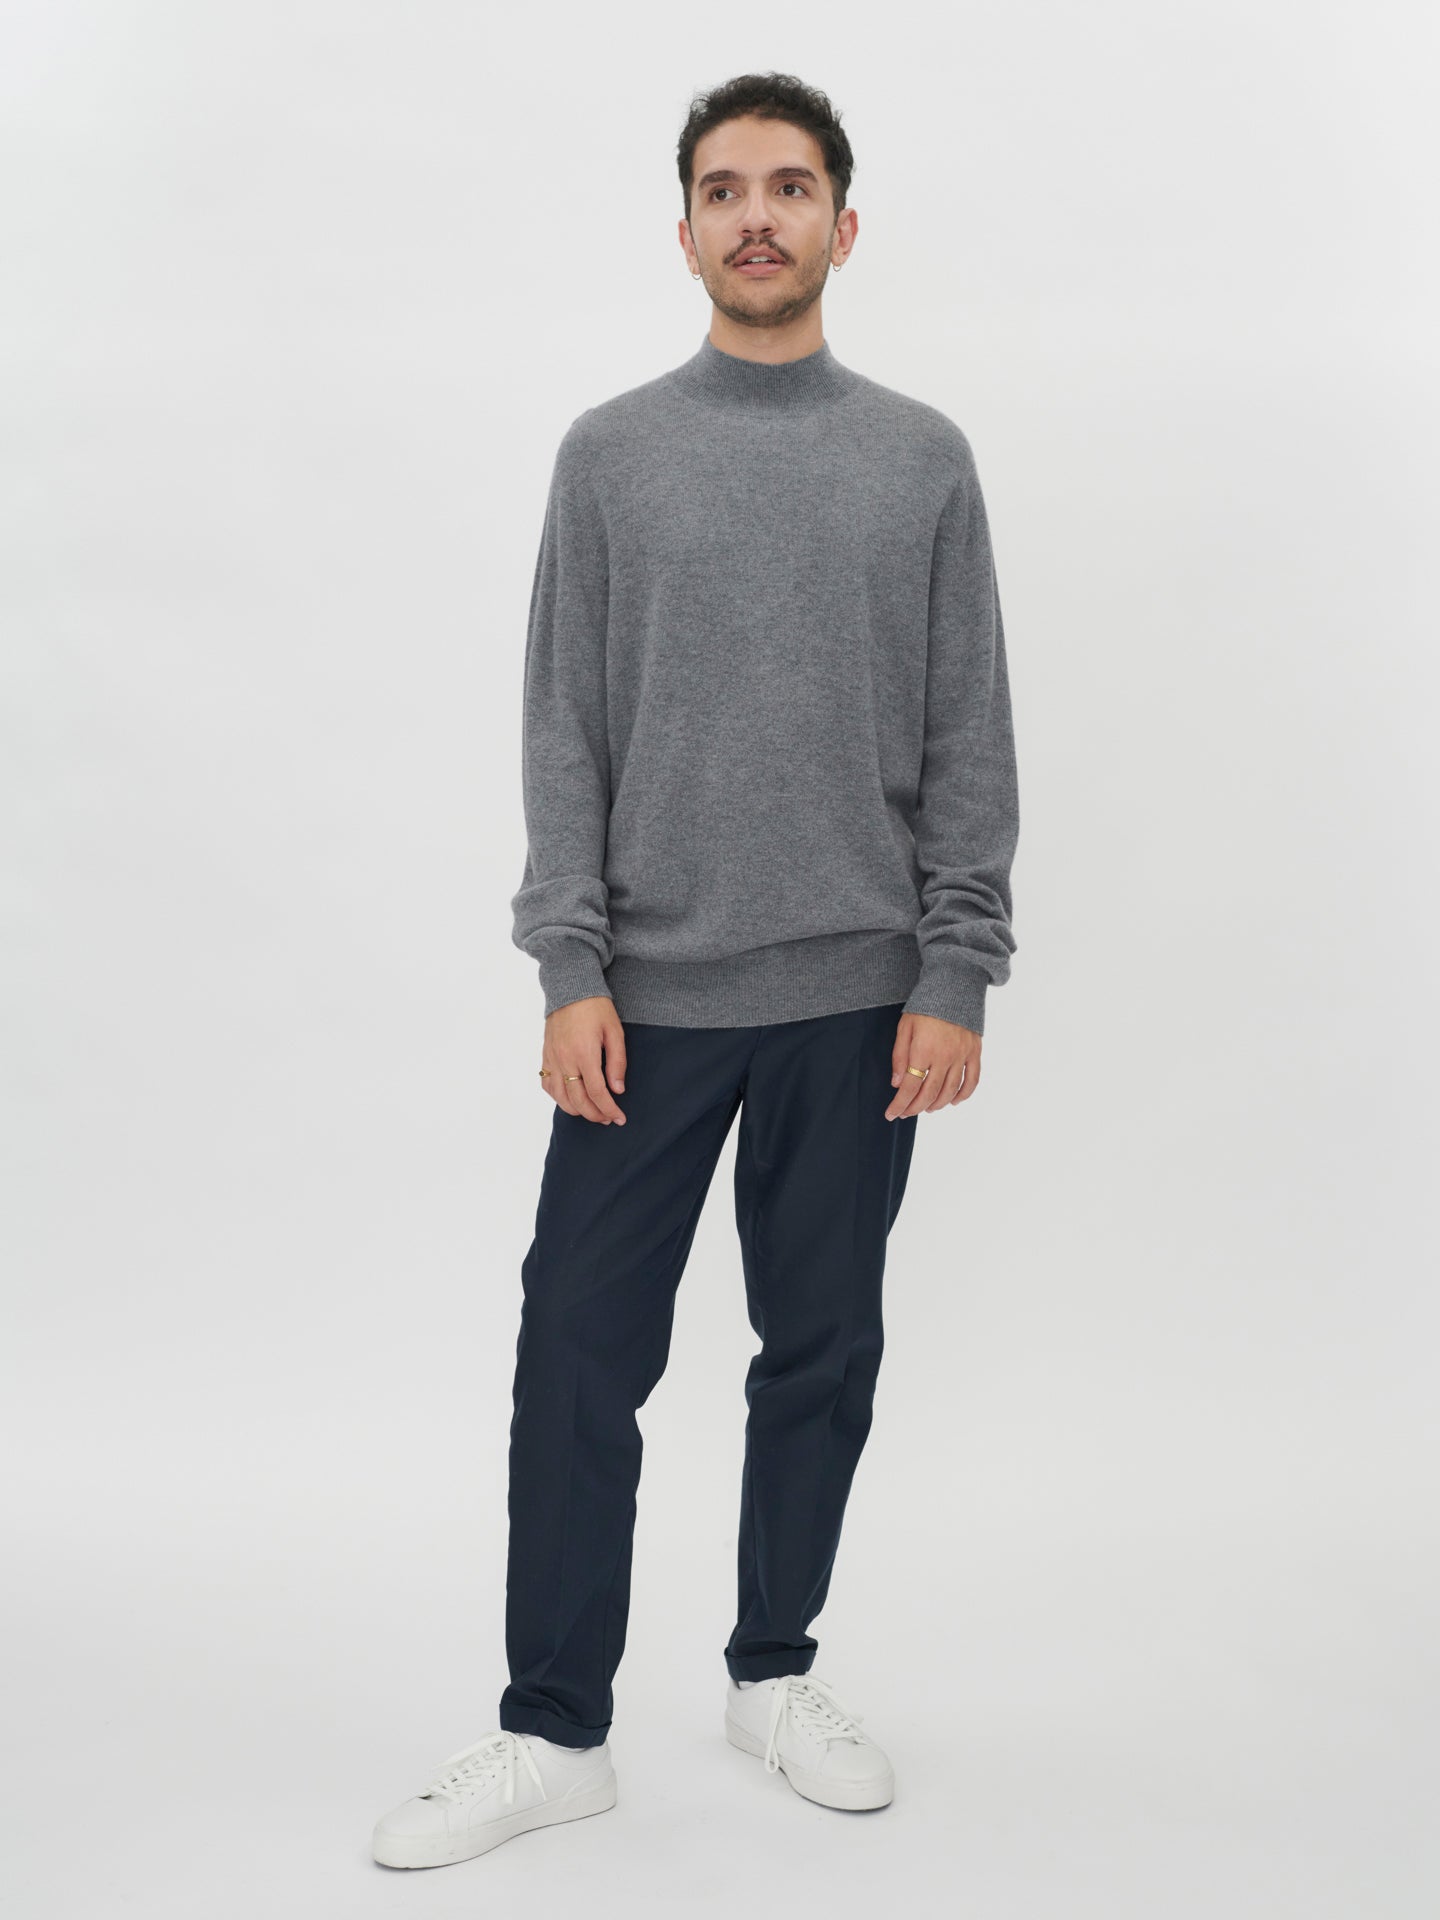 Men's Cashmere Mock Neck Sweater Dim Gray - Gobi Cashmere